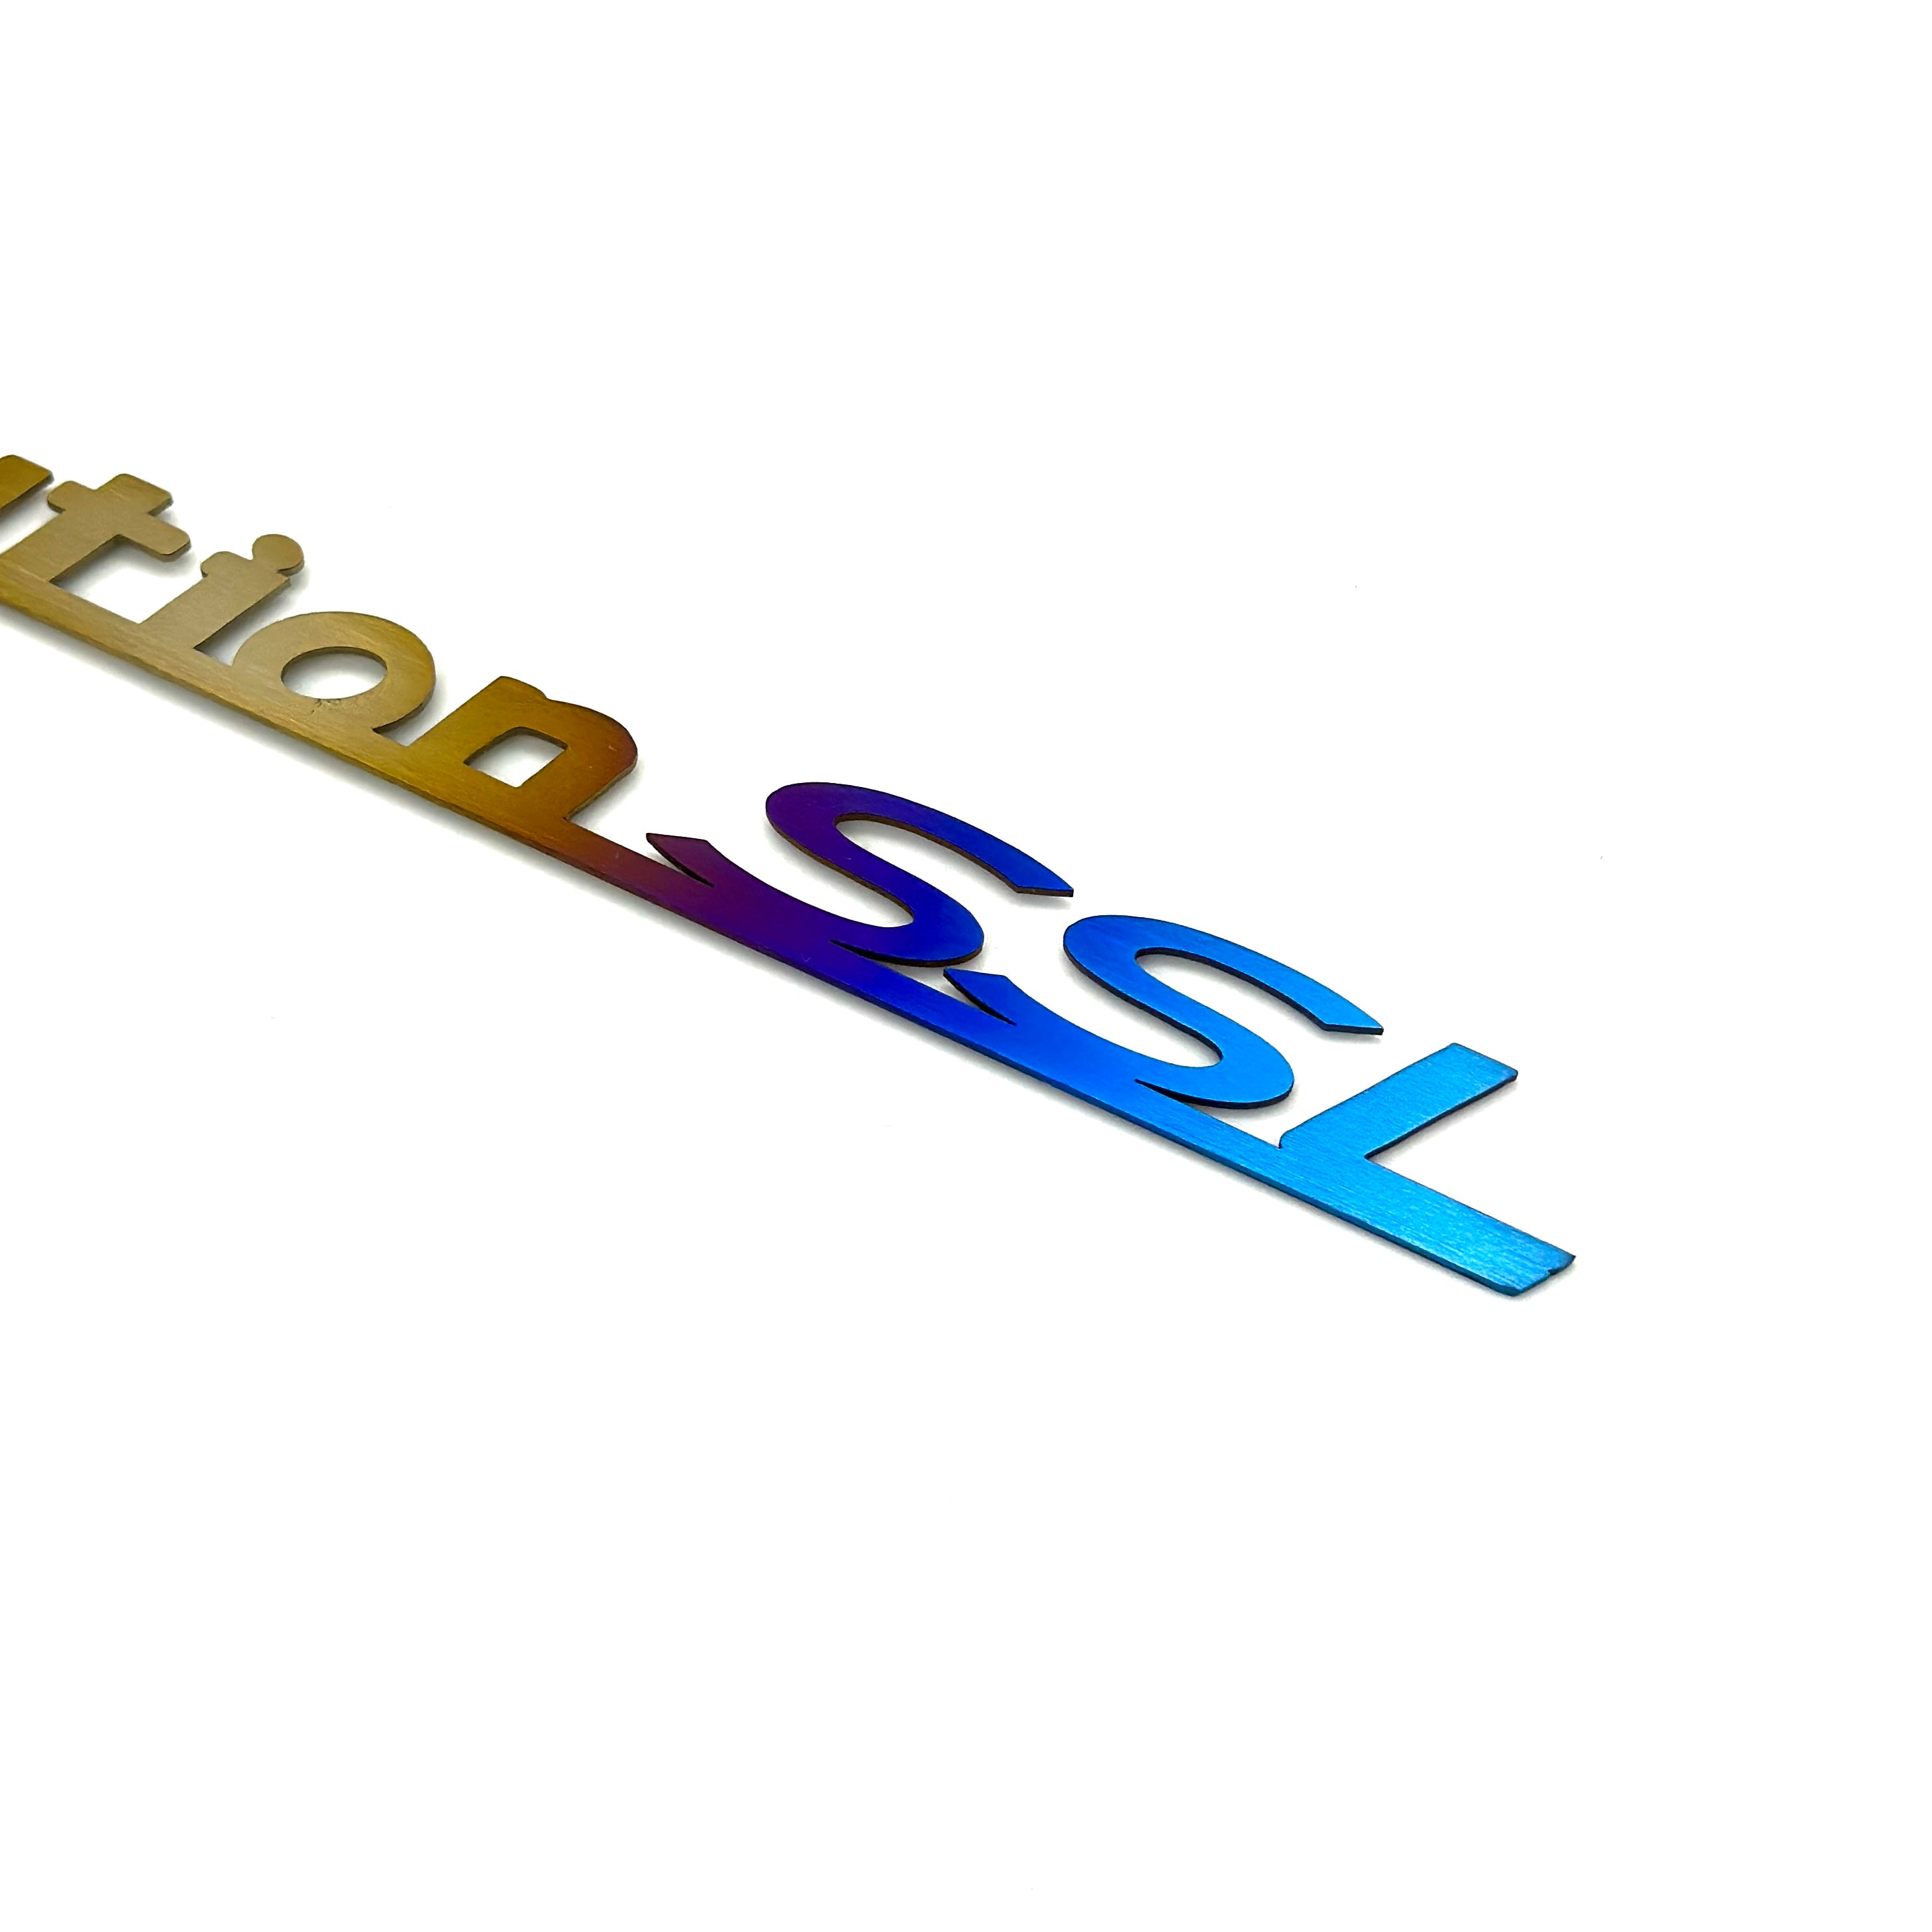 Insignia de maletero JDC Titanium "Evolution SSL" (Evo 8/9)